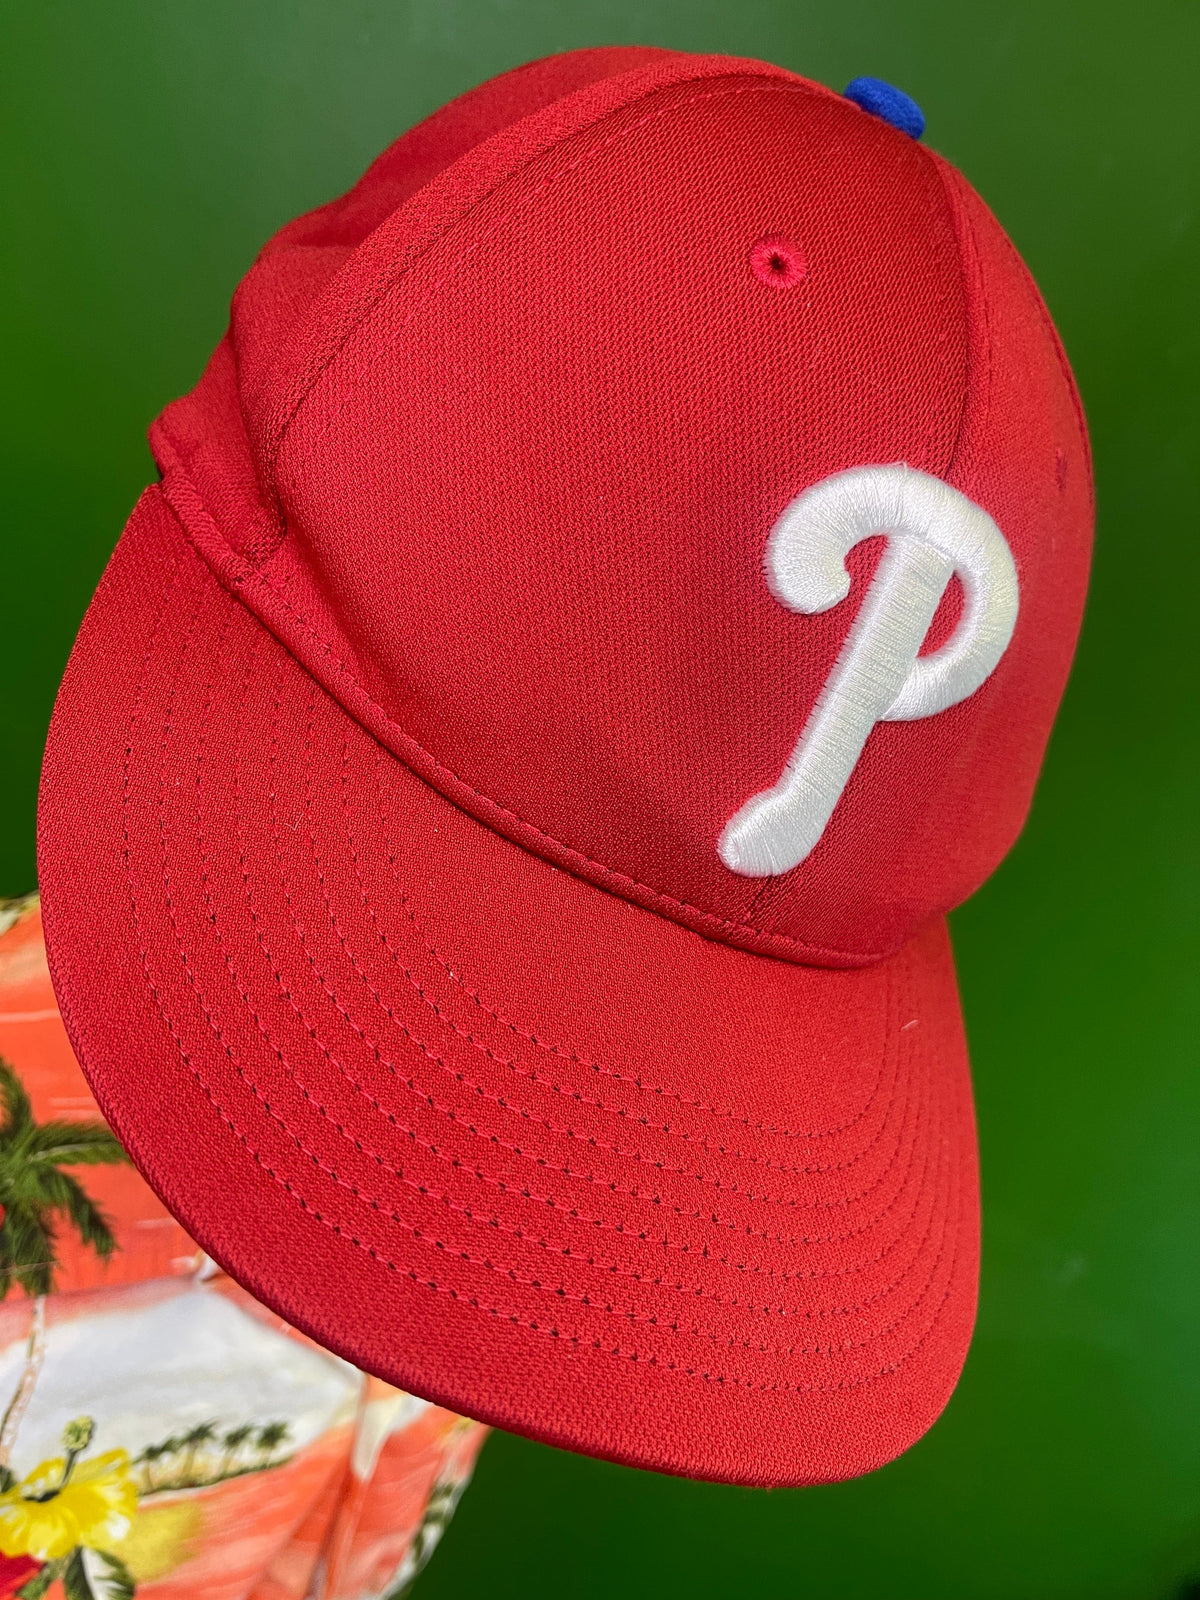 MLB Philadelphia Phillies OC Sports Red Baseball Cap/Hat Large/X-Large